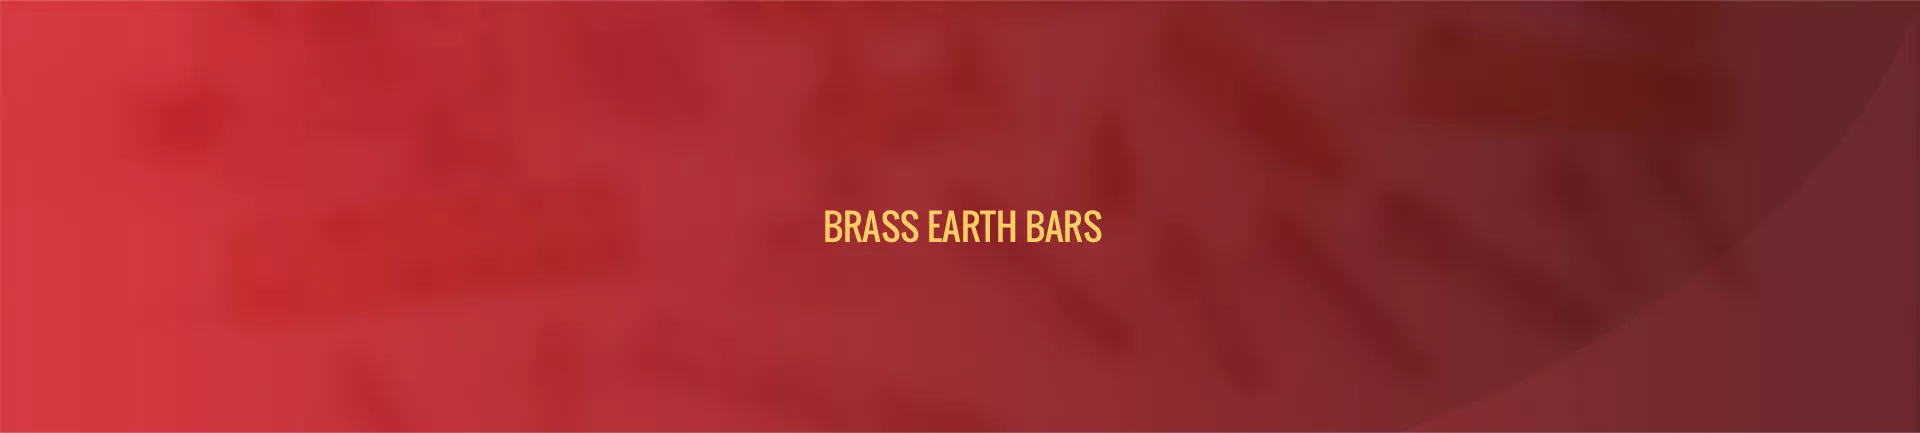 brass-earth-bars-banner